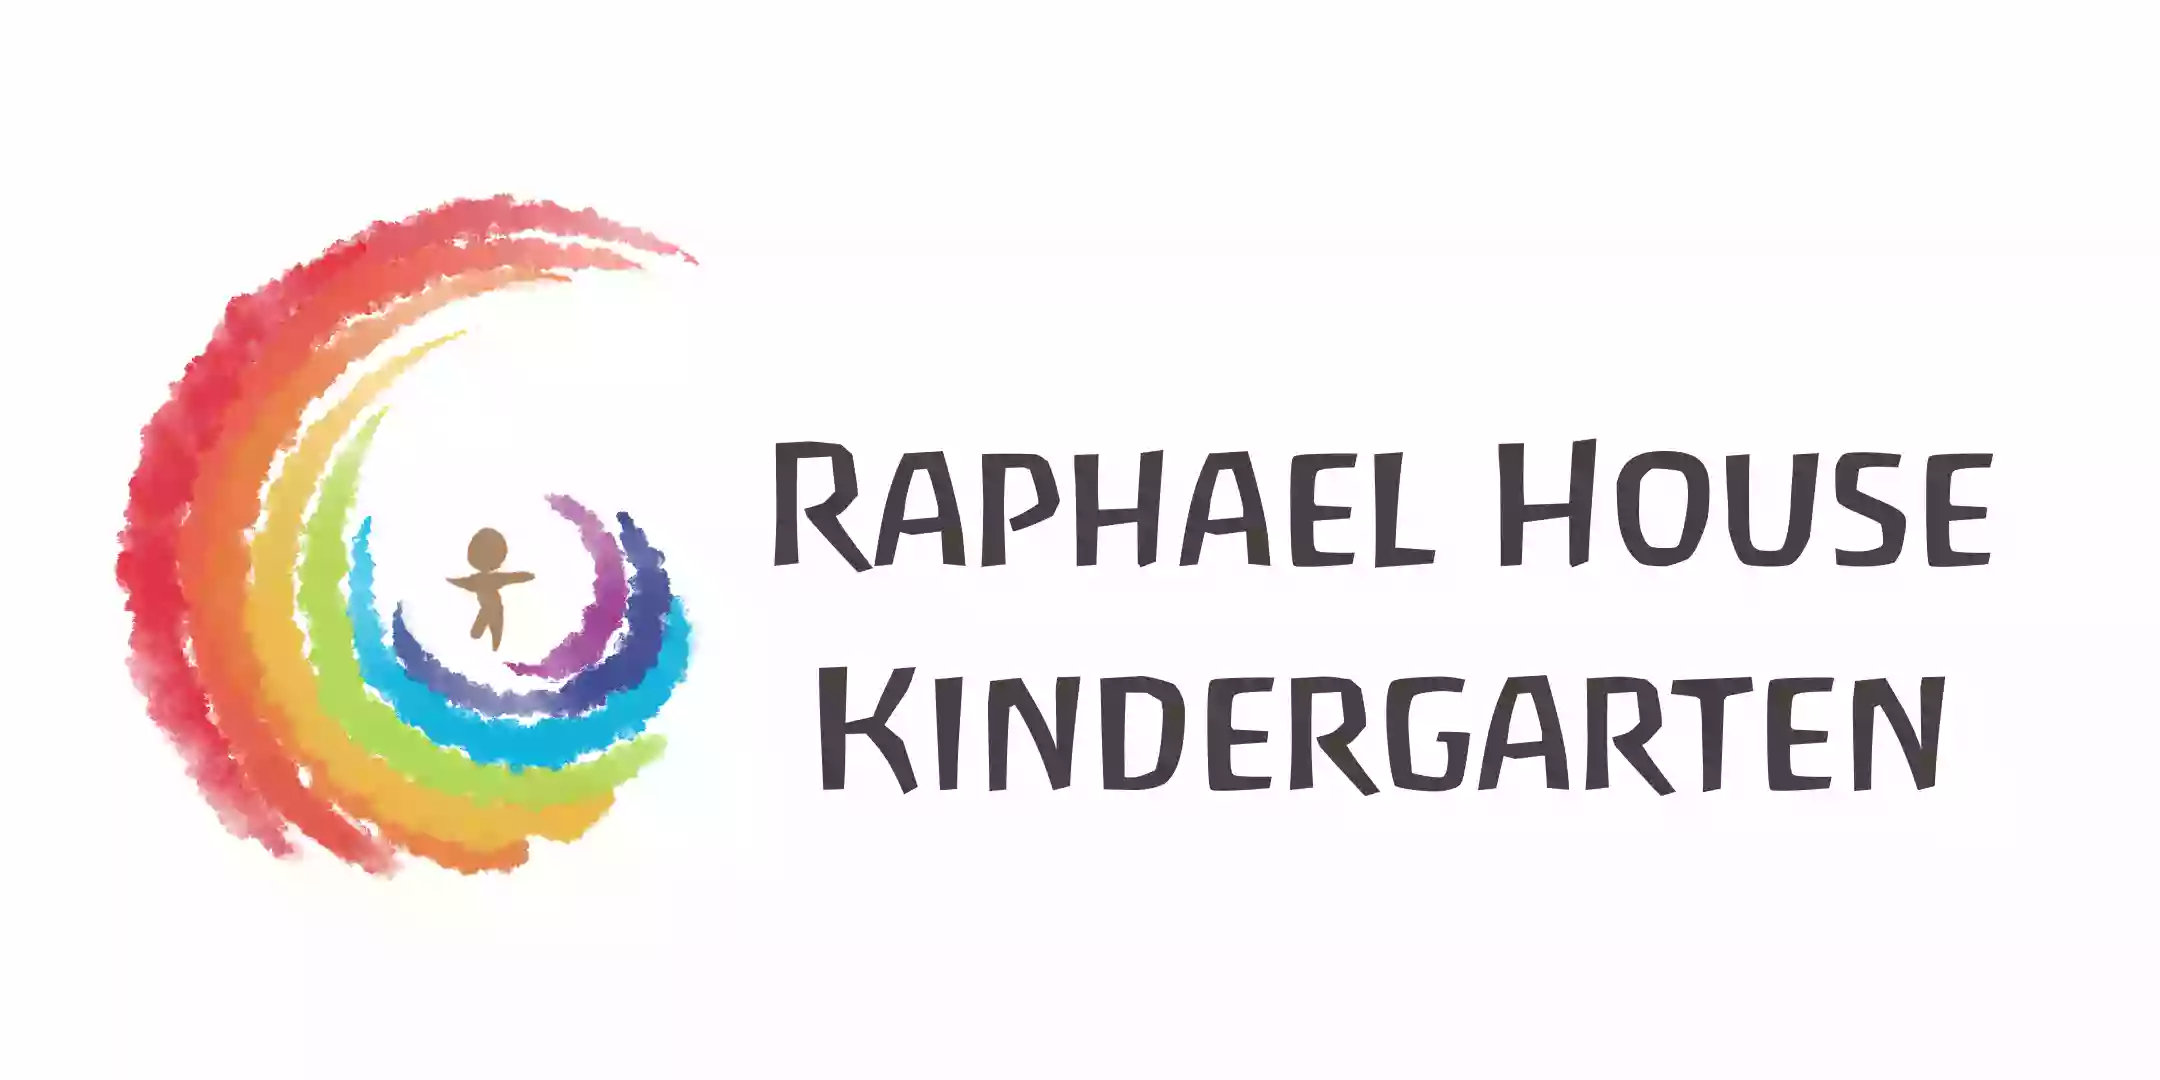 Raphael House Kindergarten